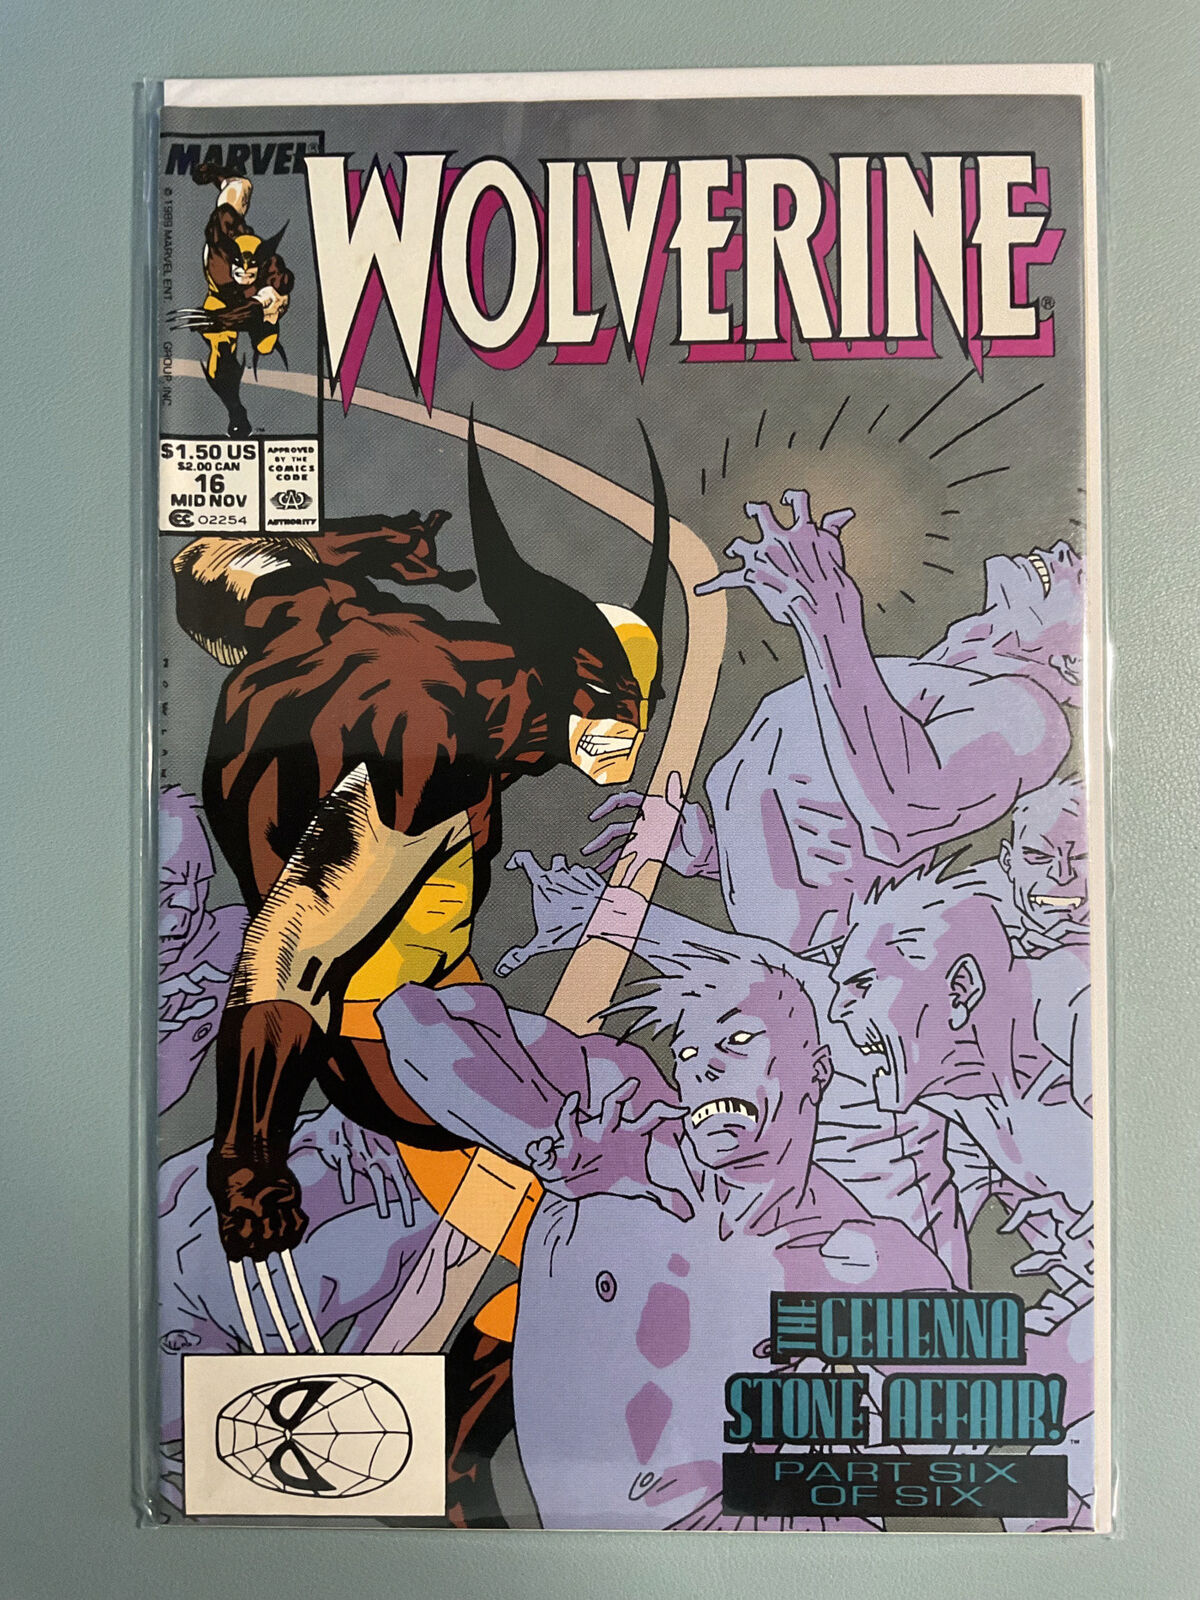 Wolverine(vol. 1) #16 - Marvel Comics - Combine Shipping